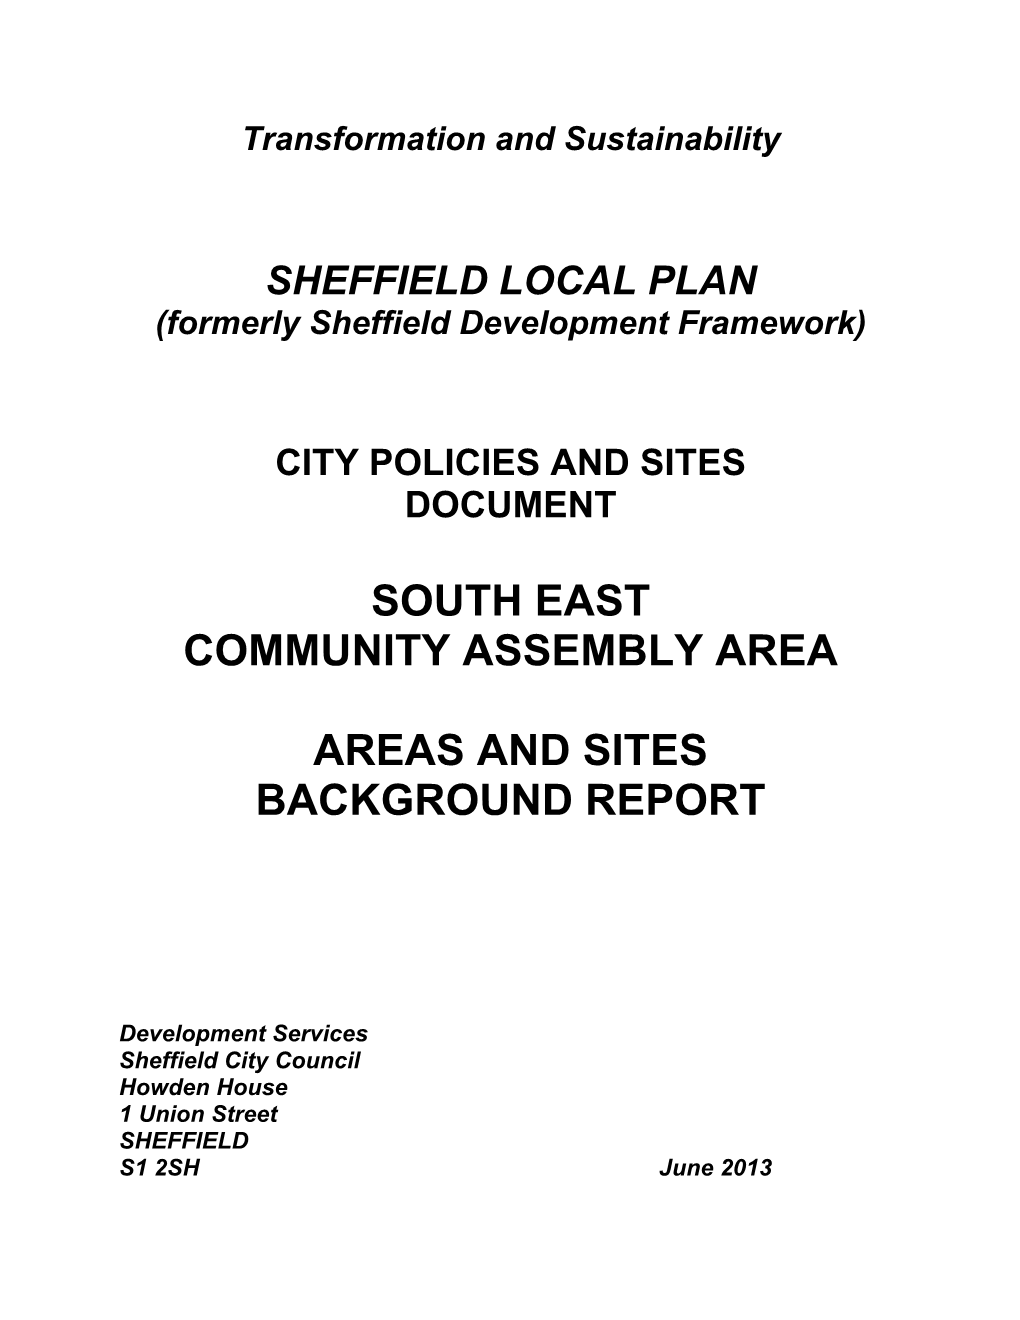 Sheffield Development Framework)